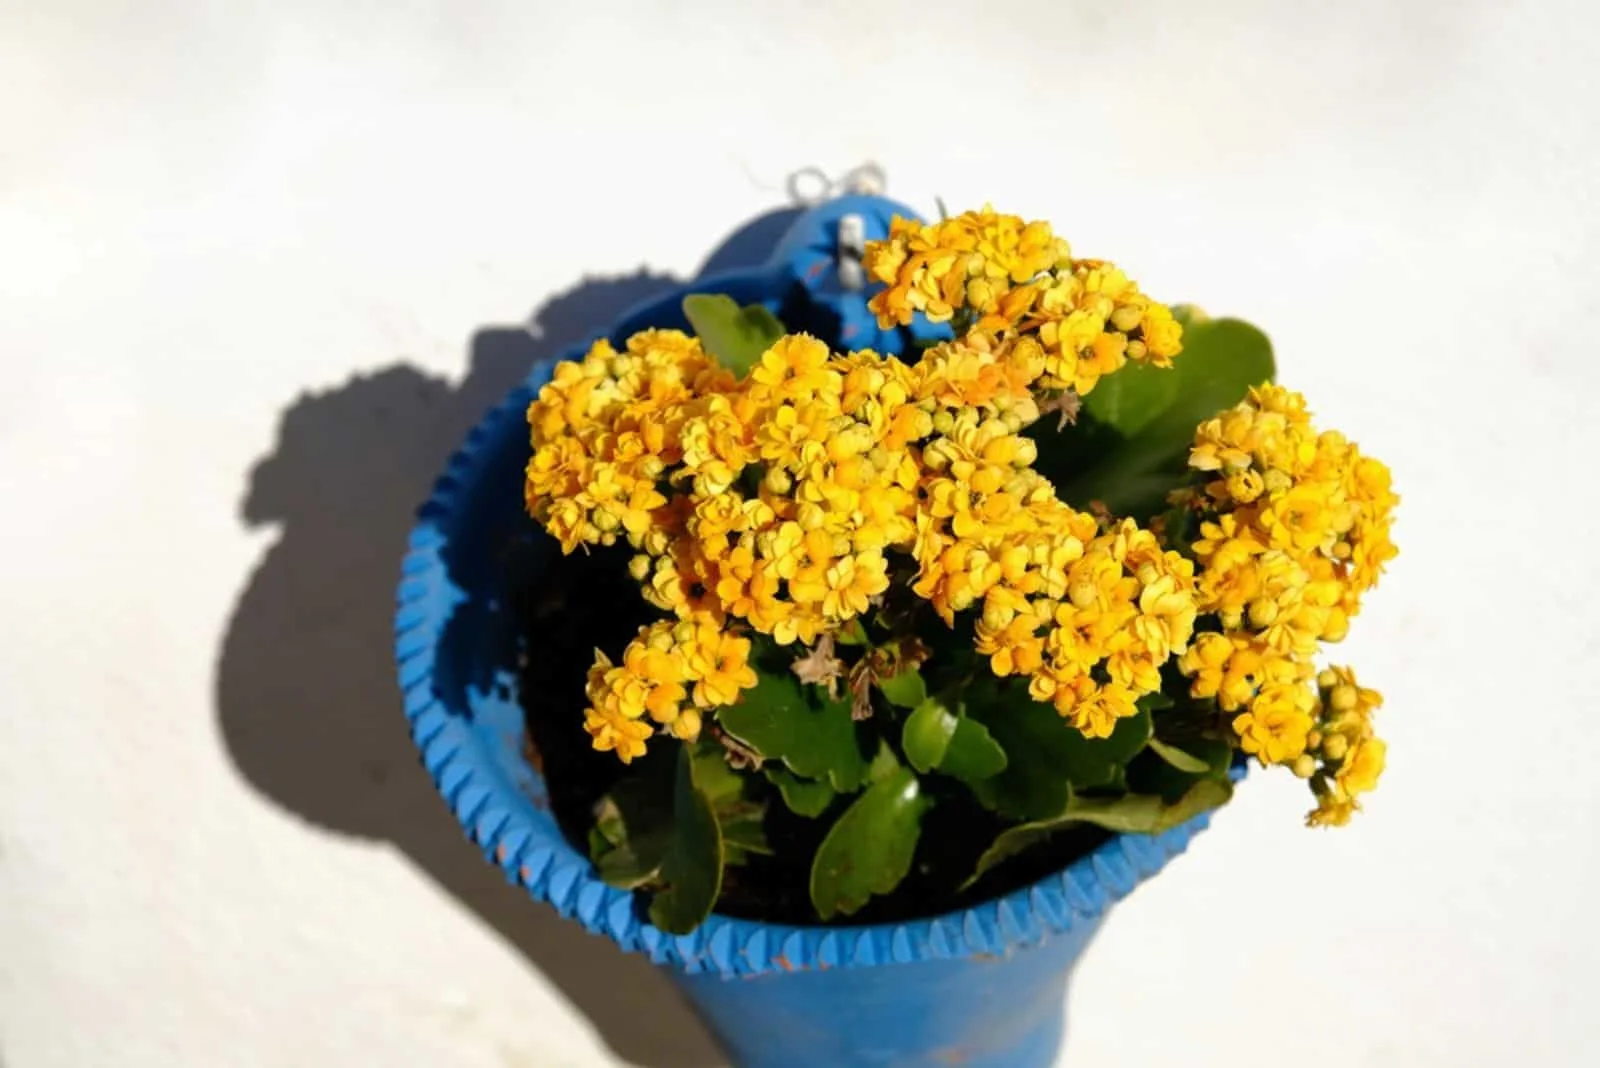 Kalanchoe Blossfeldiana in a blue pot with yellow flowers